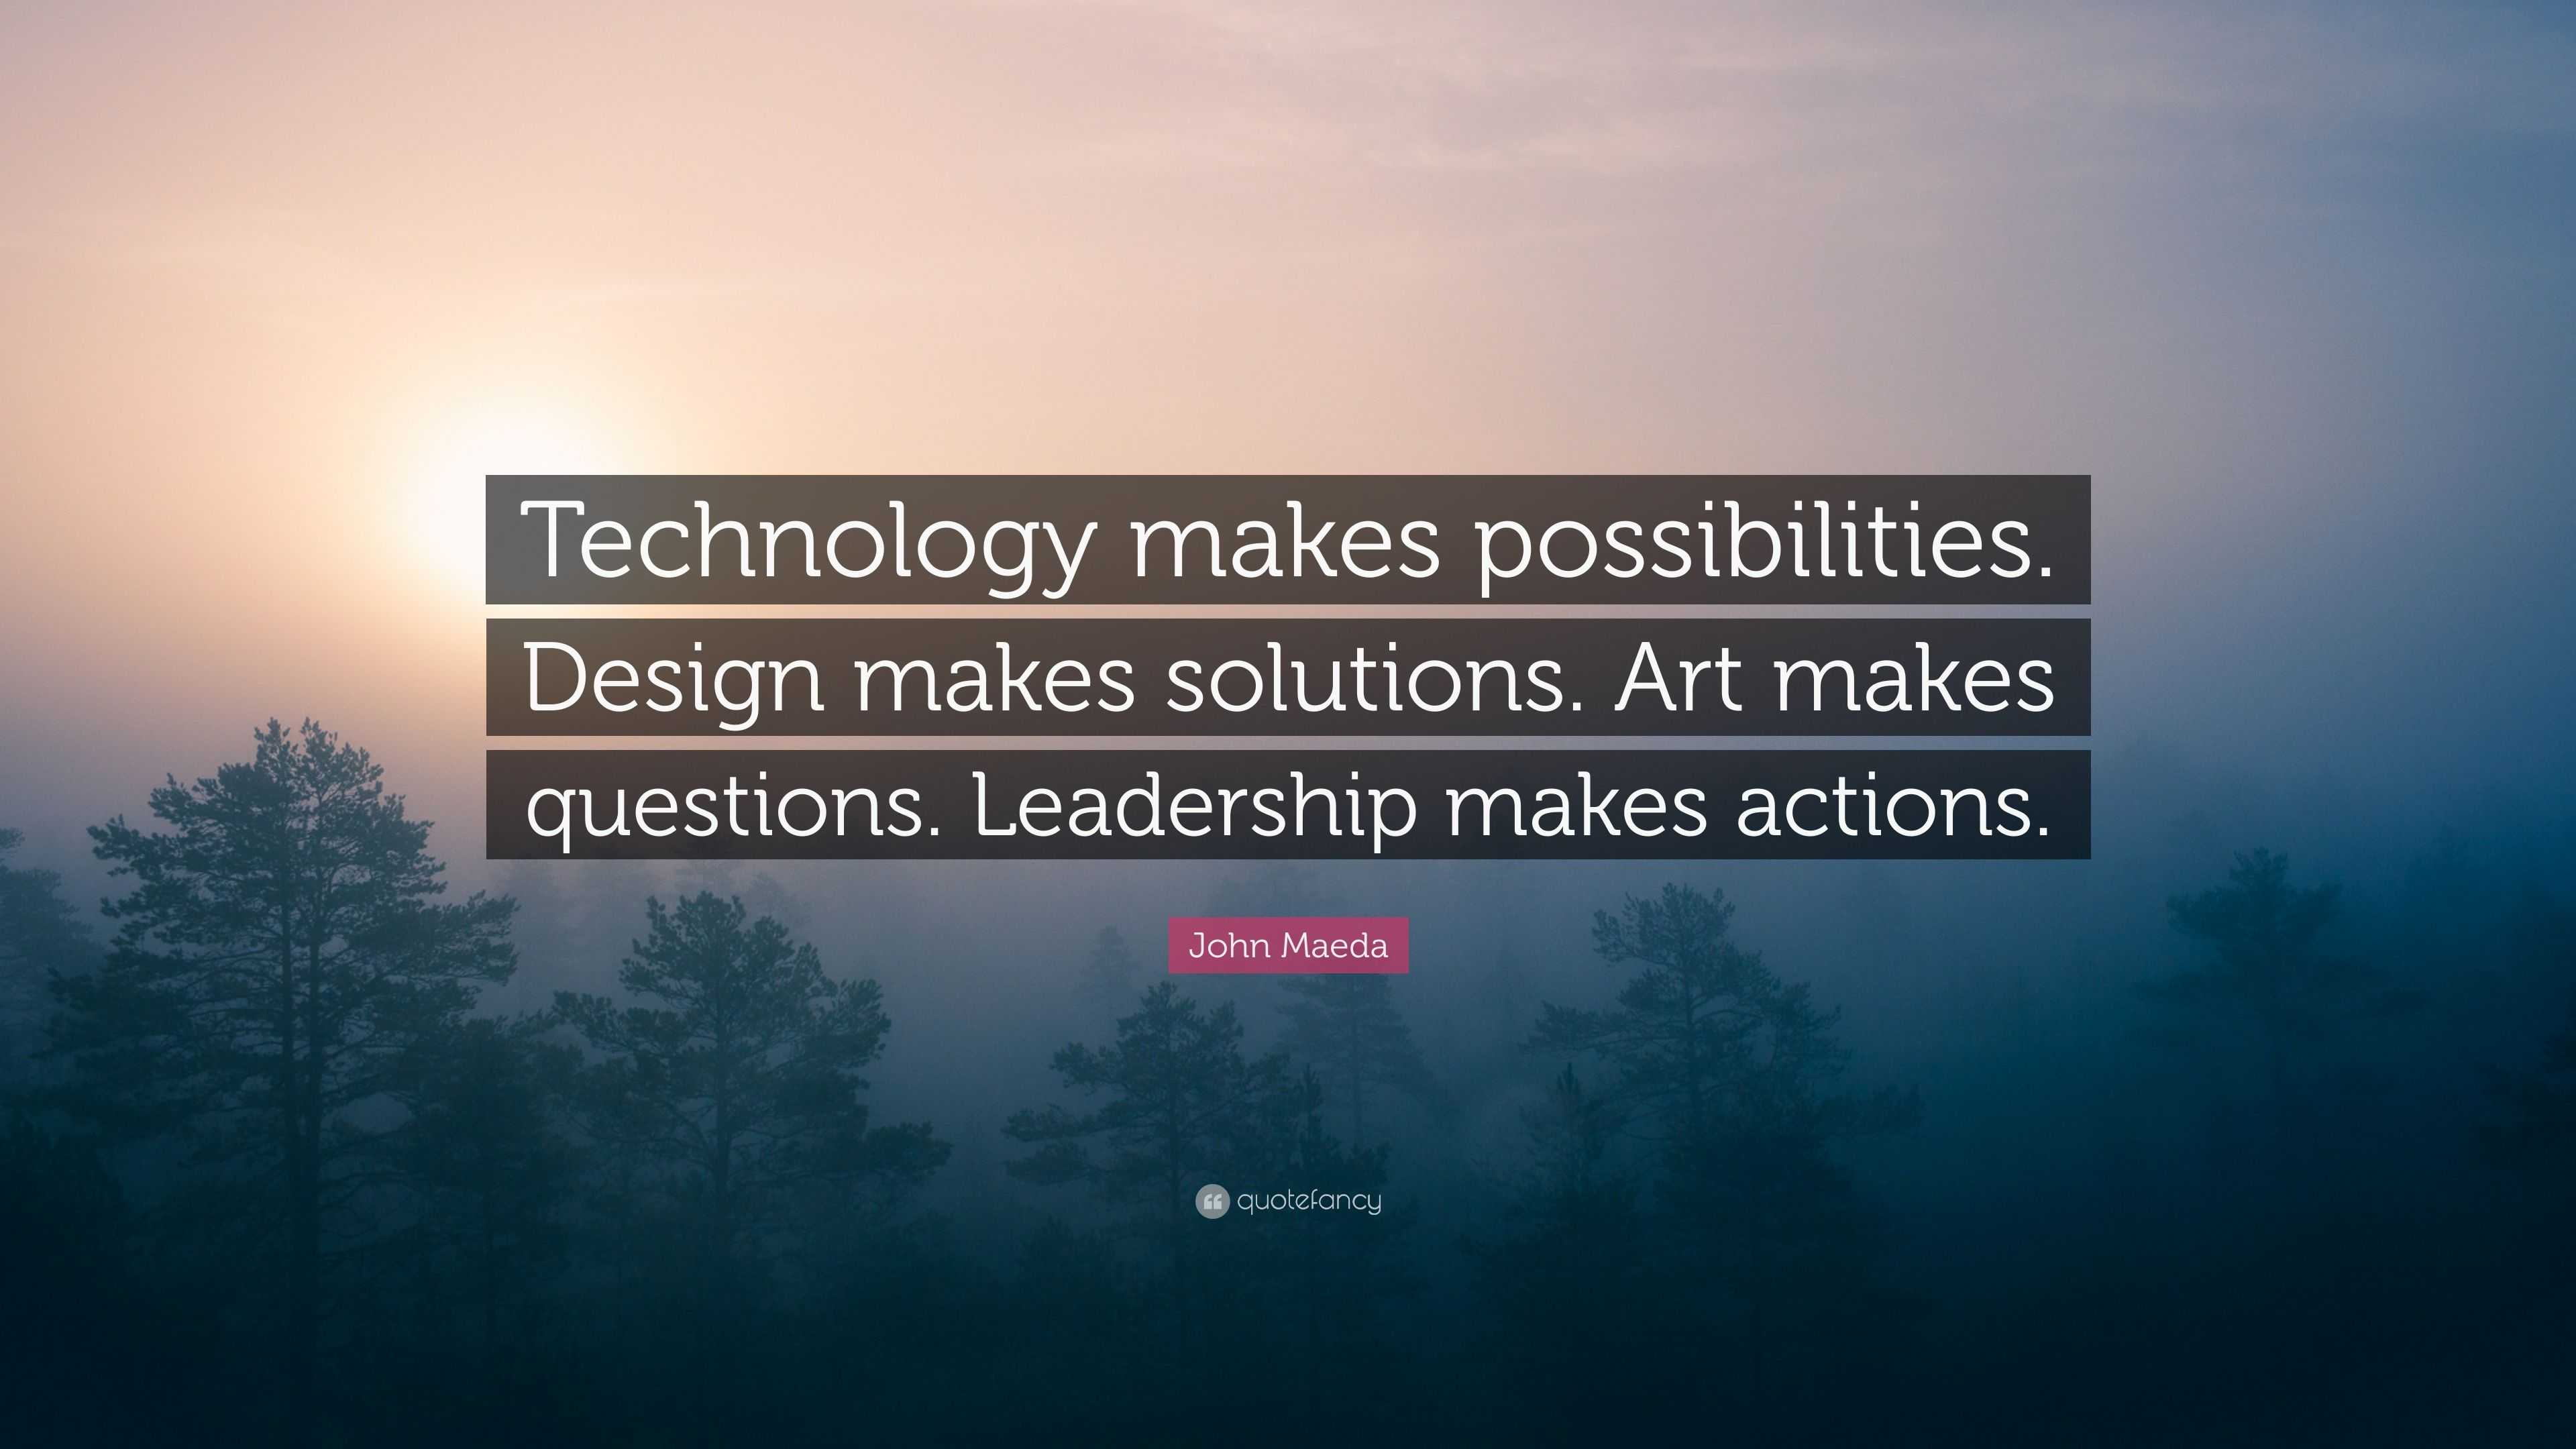 John Maeda Quote: “Technology makes possibilities. Design makes ...